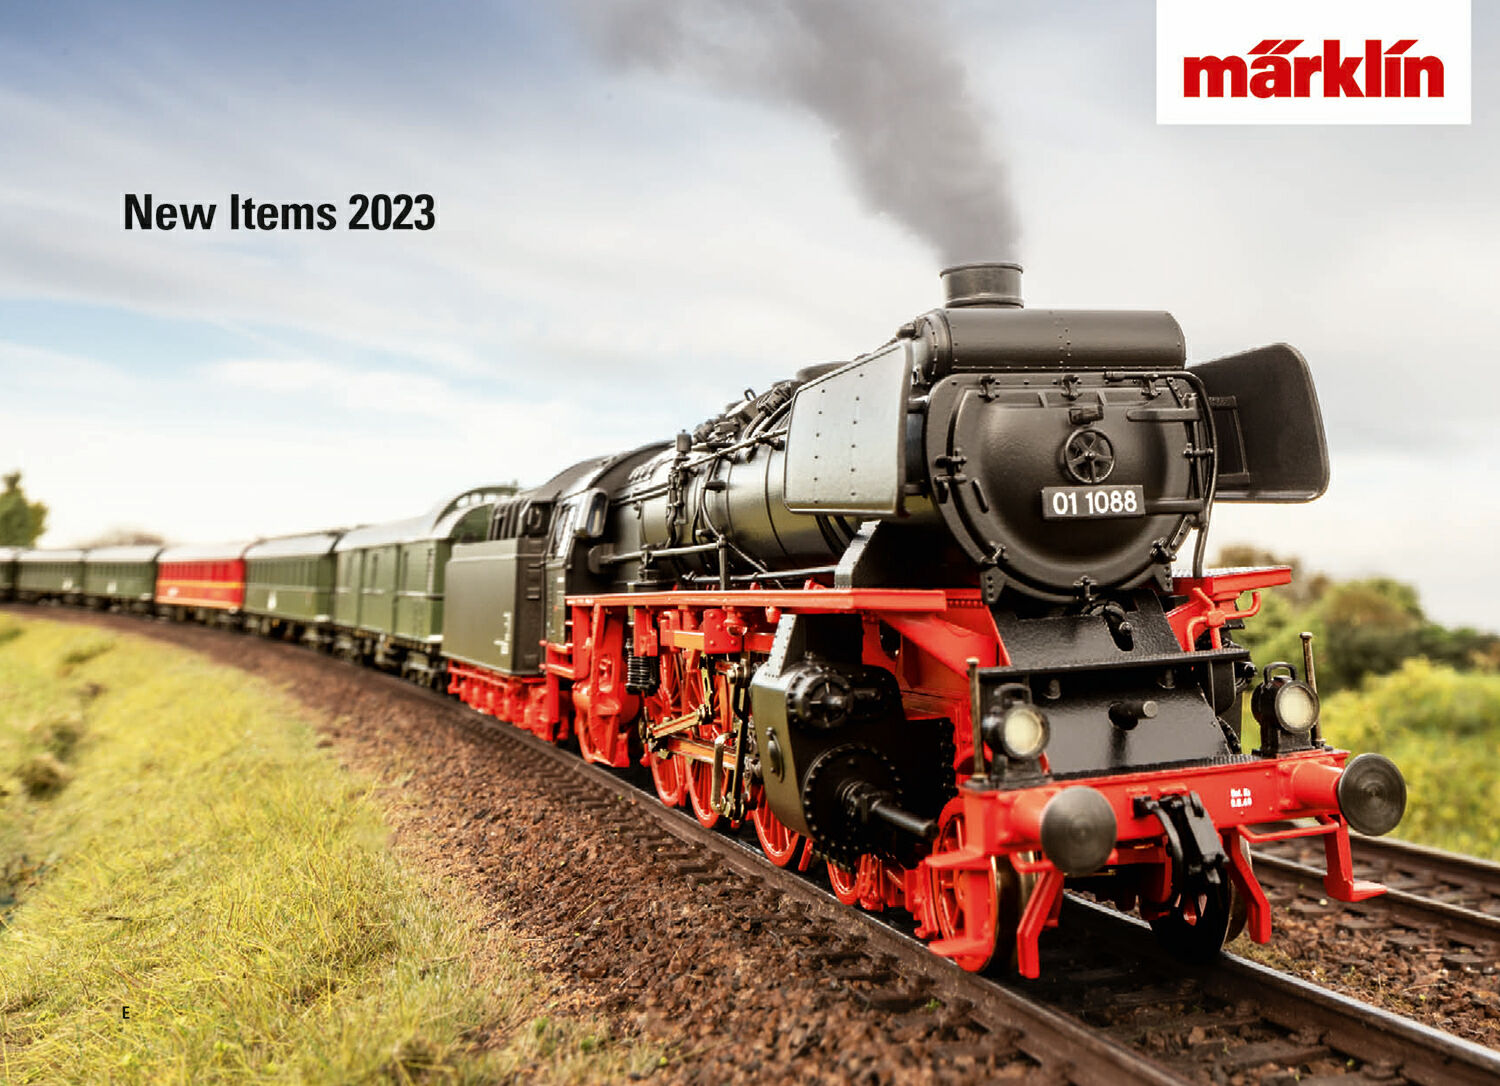 Marklin/new items/2023